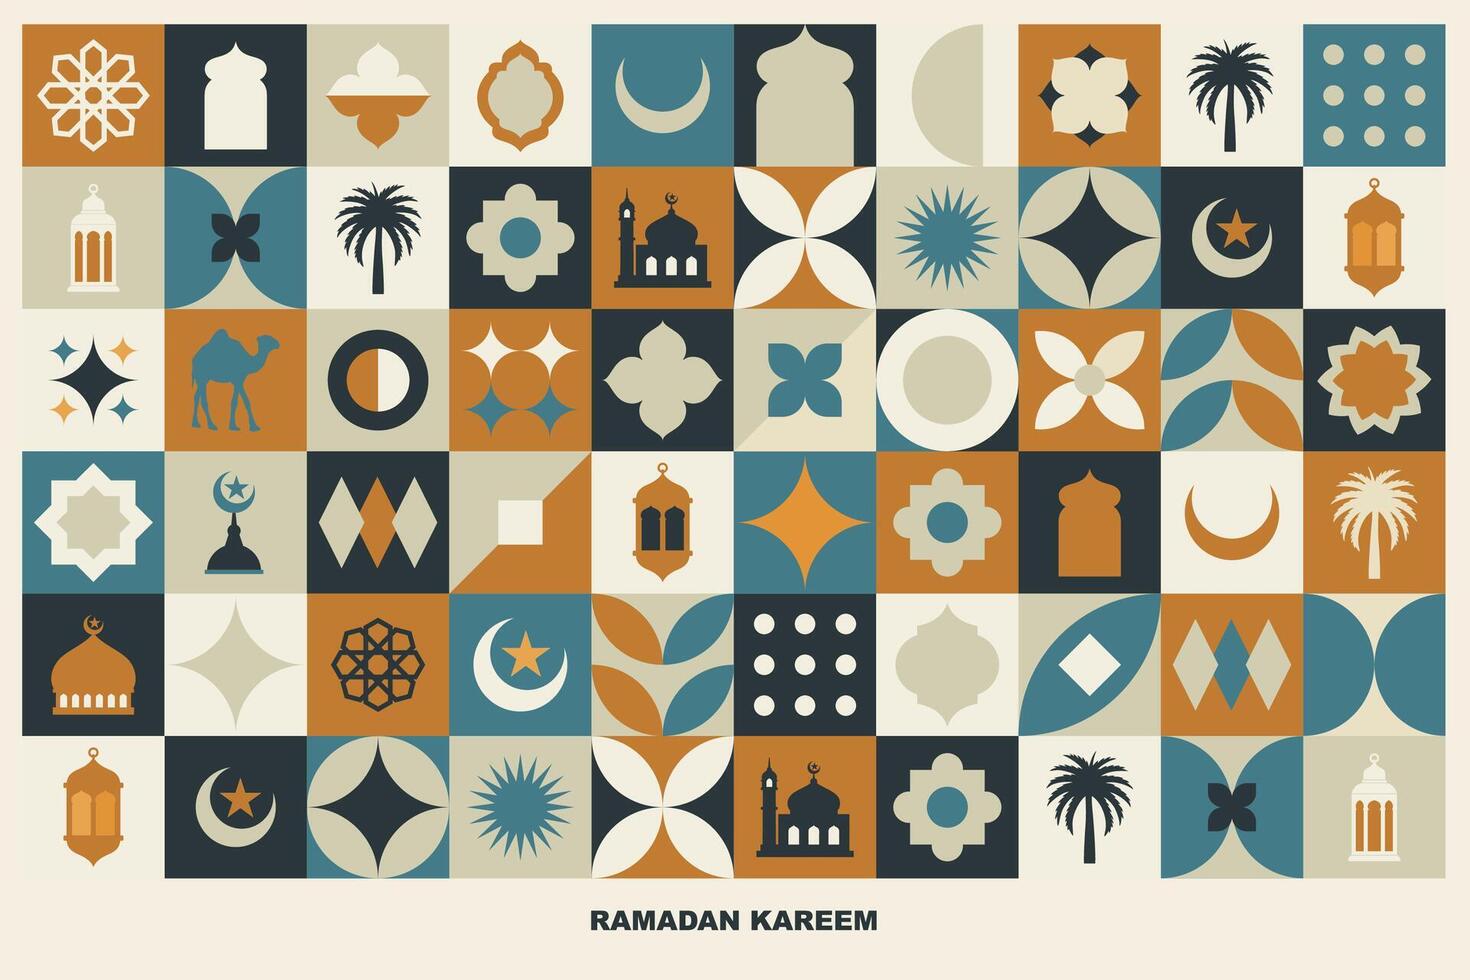 geométrico estilo colorida islâmico Ramadã kareem bandeira, poster projeto, padronizar e geométrico fundo. mesquita, lua, cúpula e lanternas. minimalista ilustrações vetor